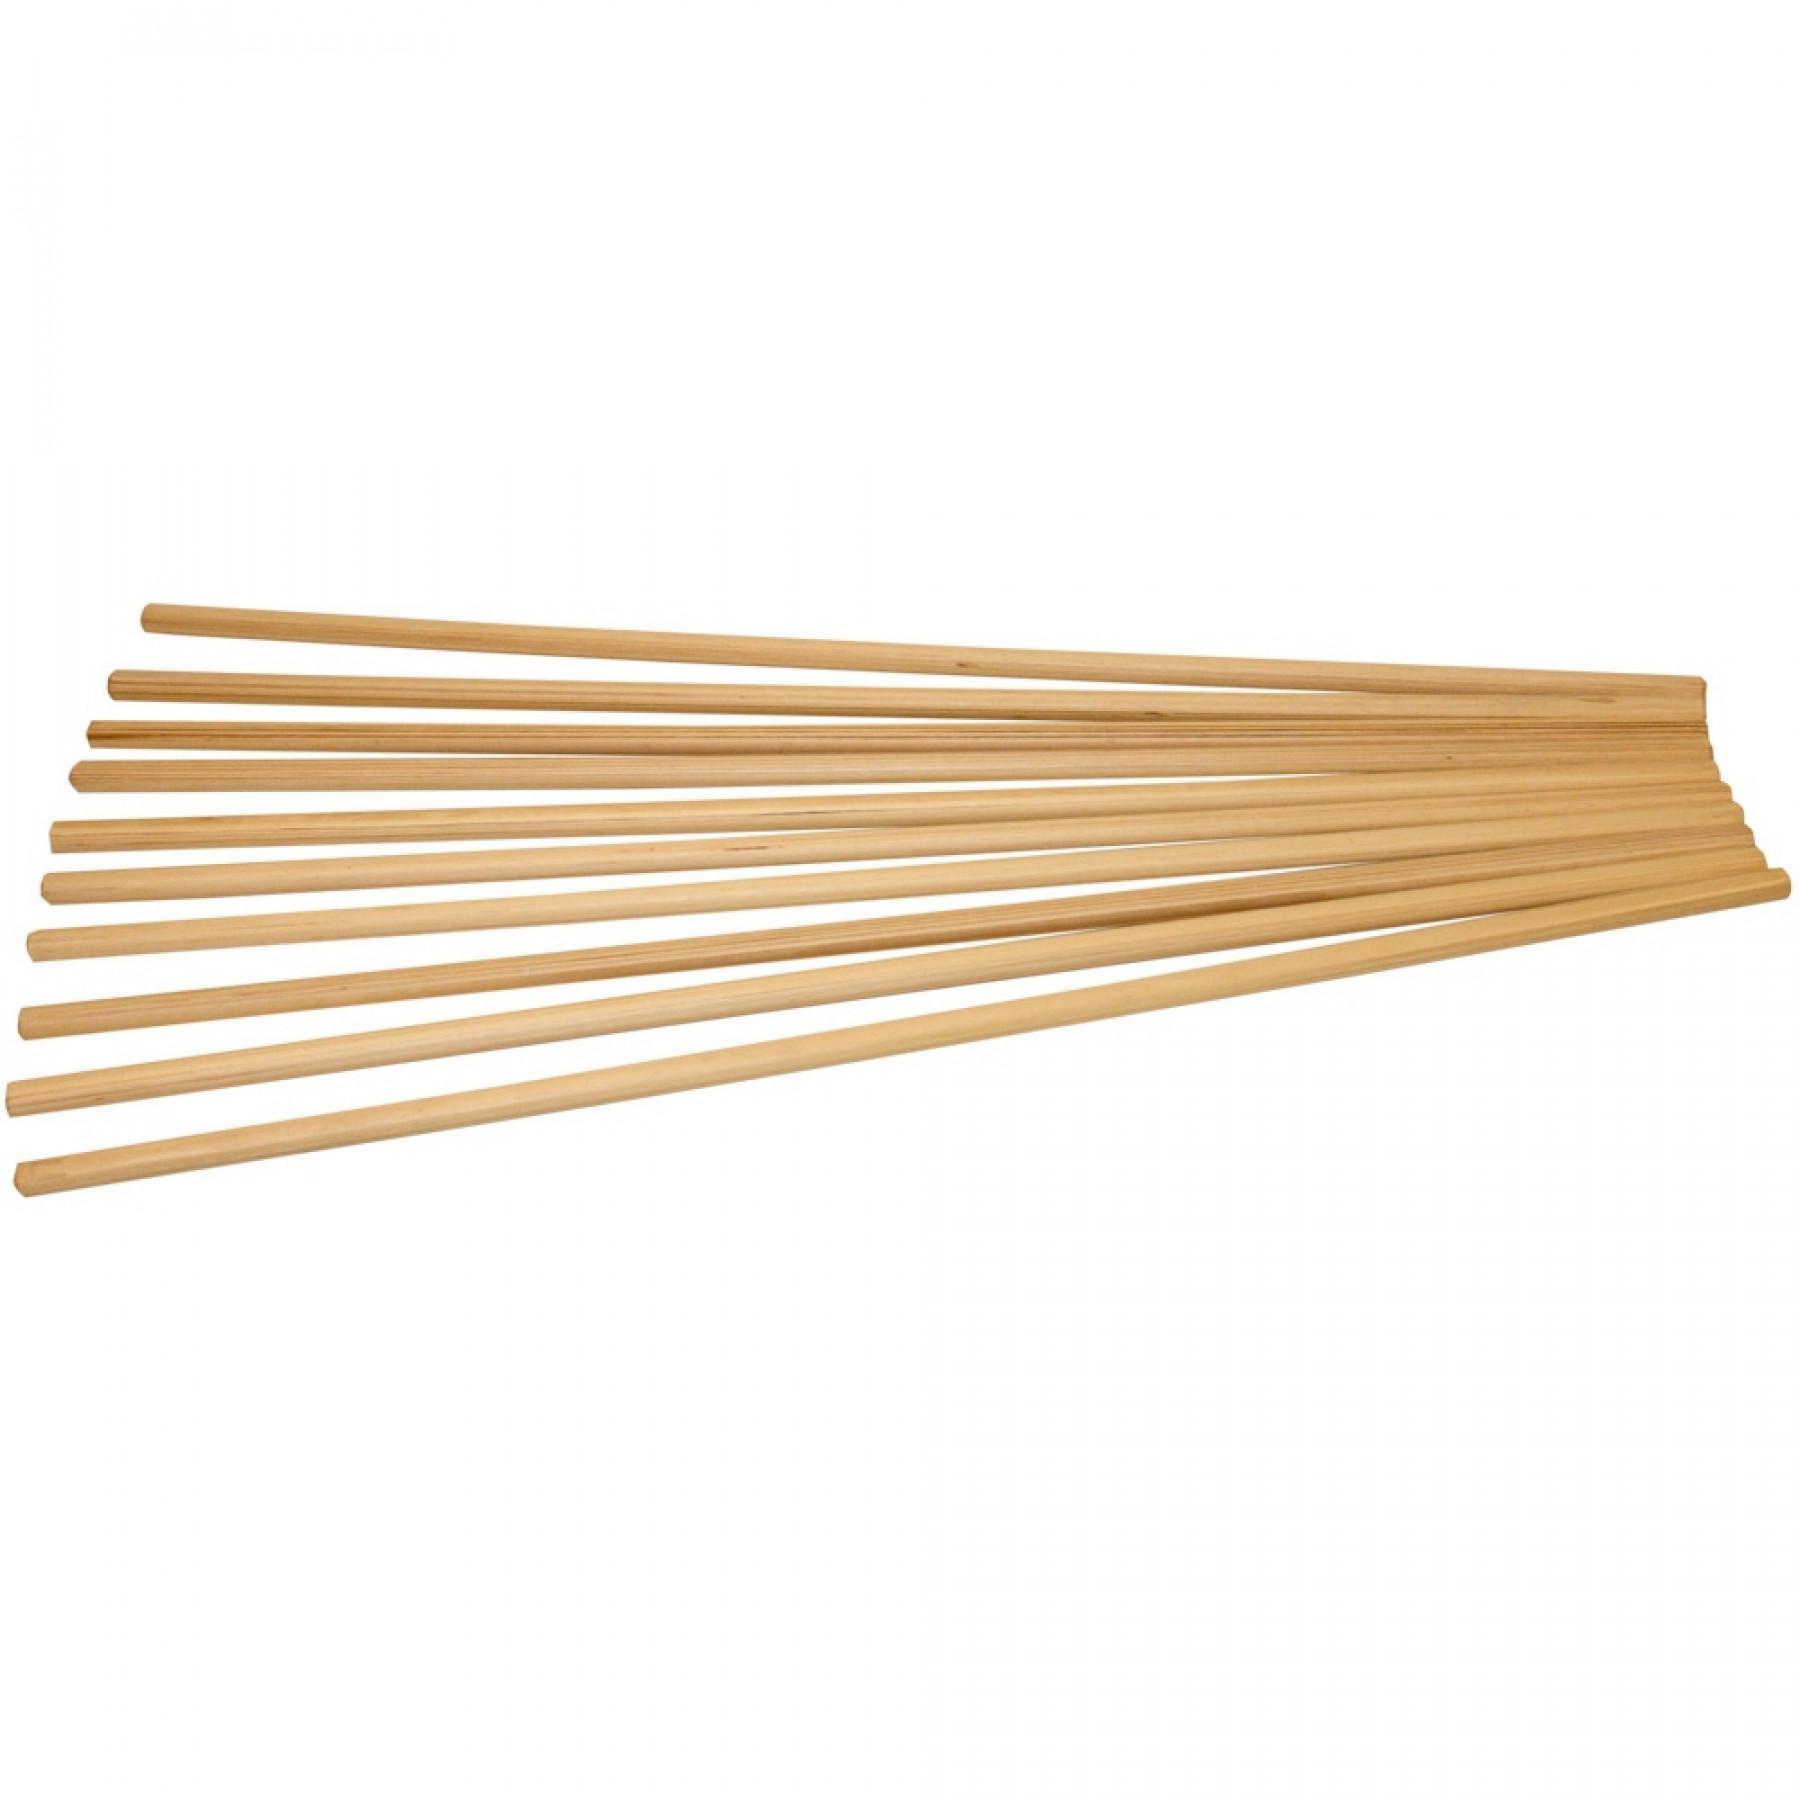 Wooden sticks Leader Fit 120cm (x10)